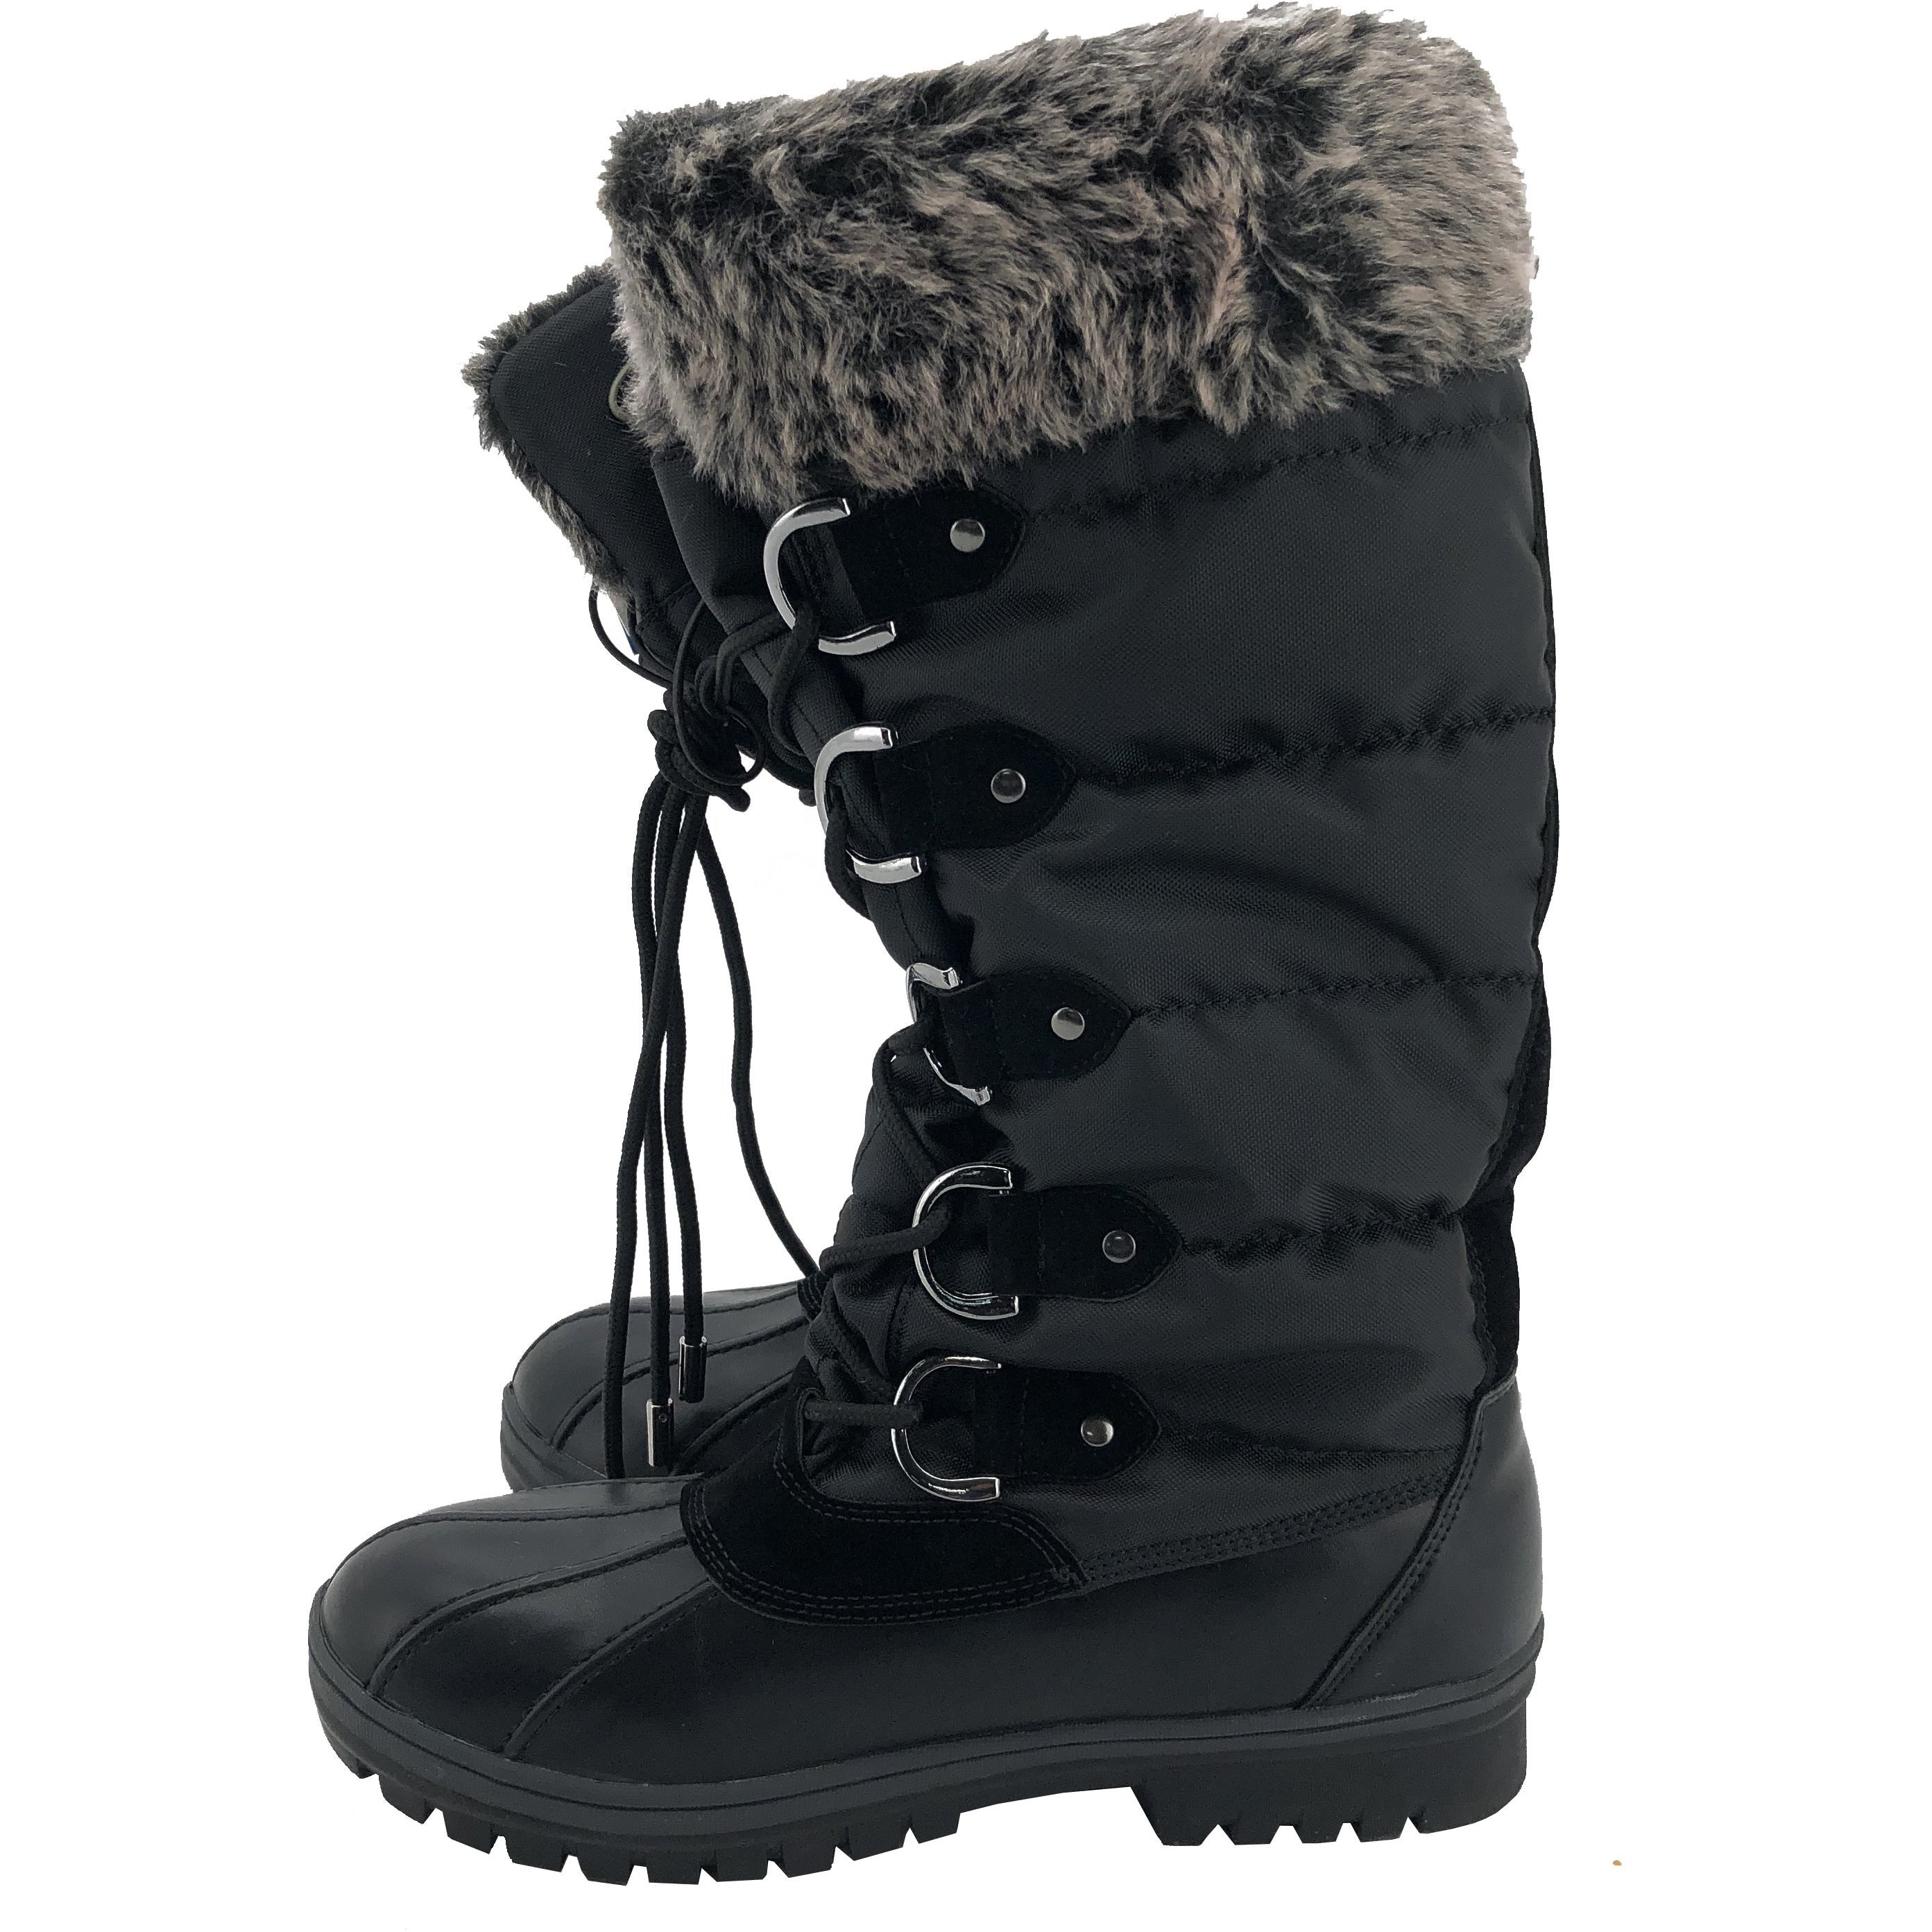 Aquatherm Ladies winter Boots with Fur Fringe